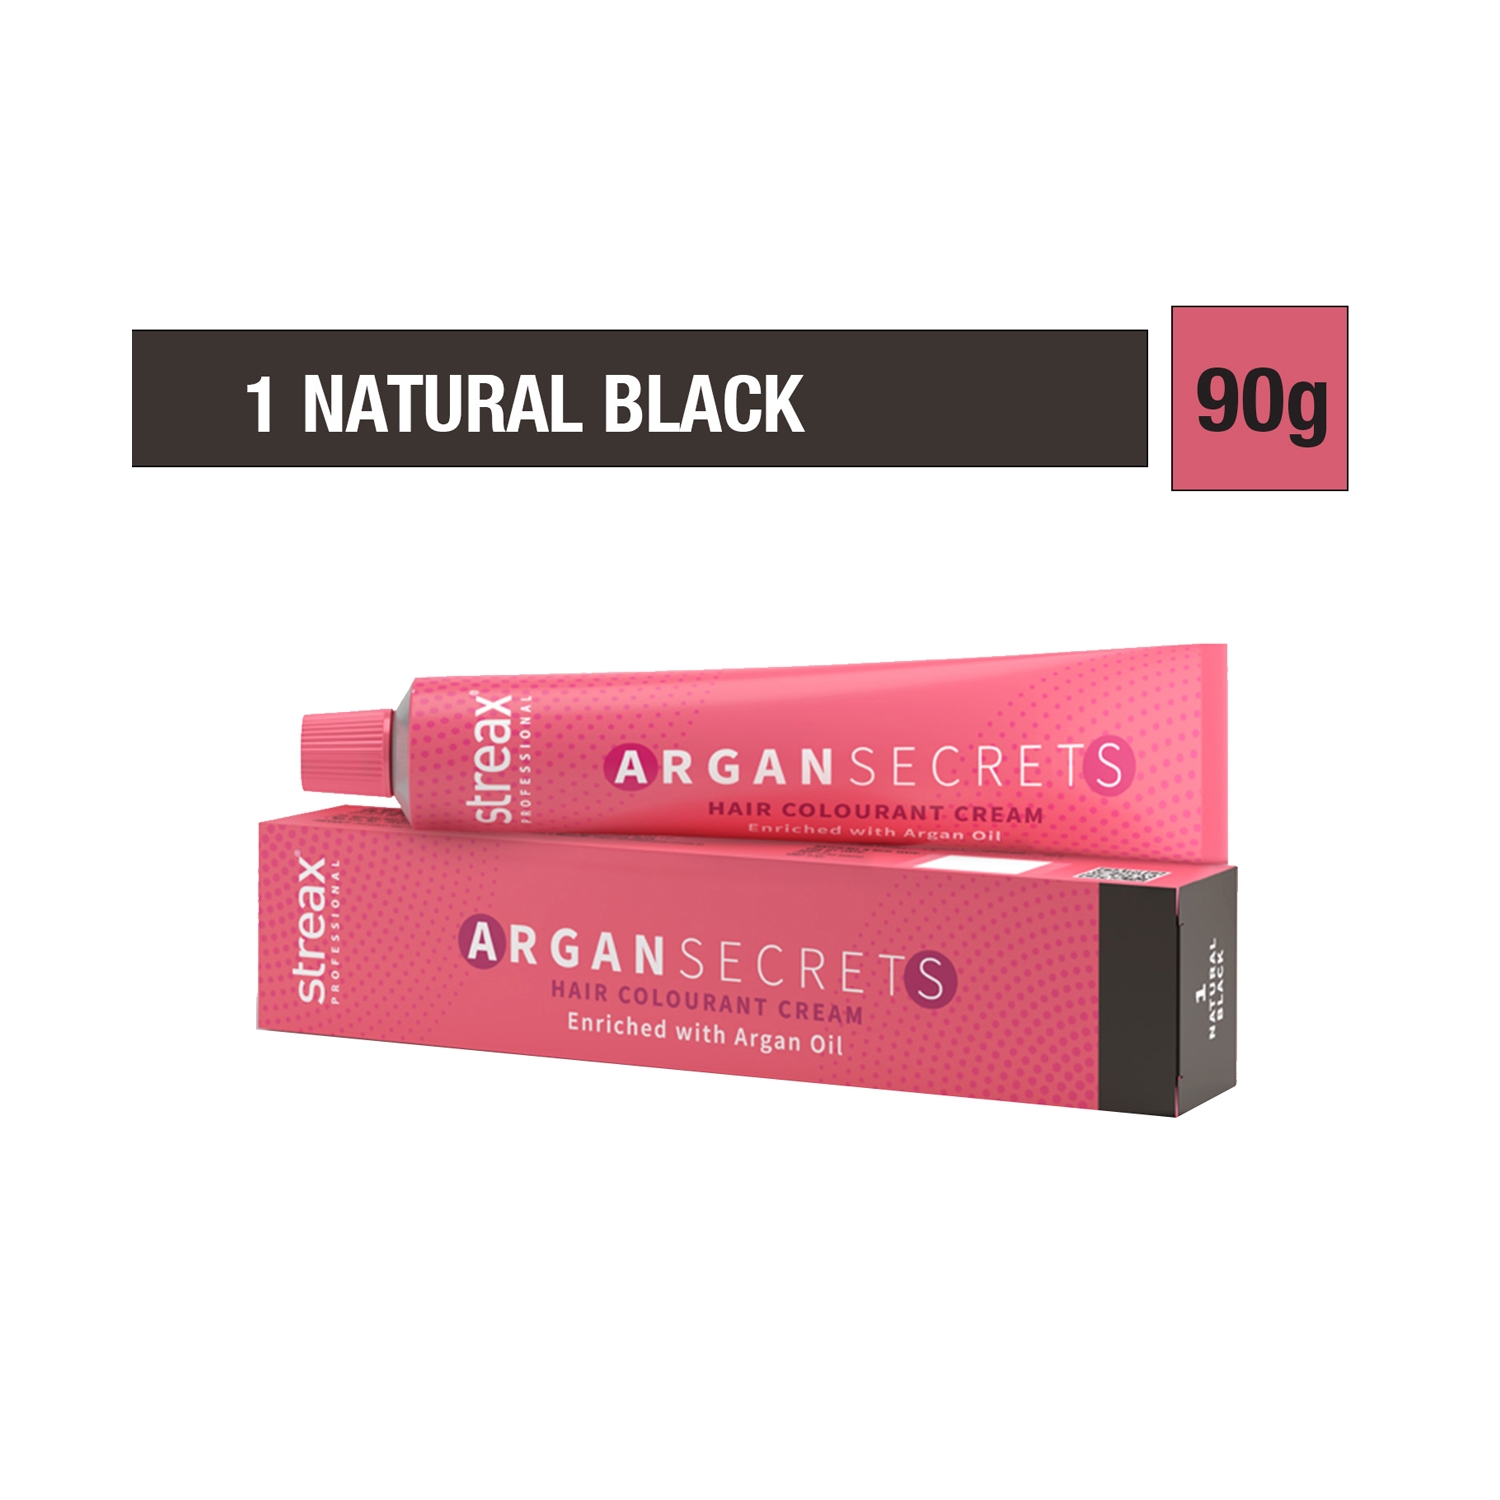 Streax Professional | Streax Professional Argan Secrets Hair Colorant Cream - 1 Natural Black (90g)